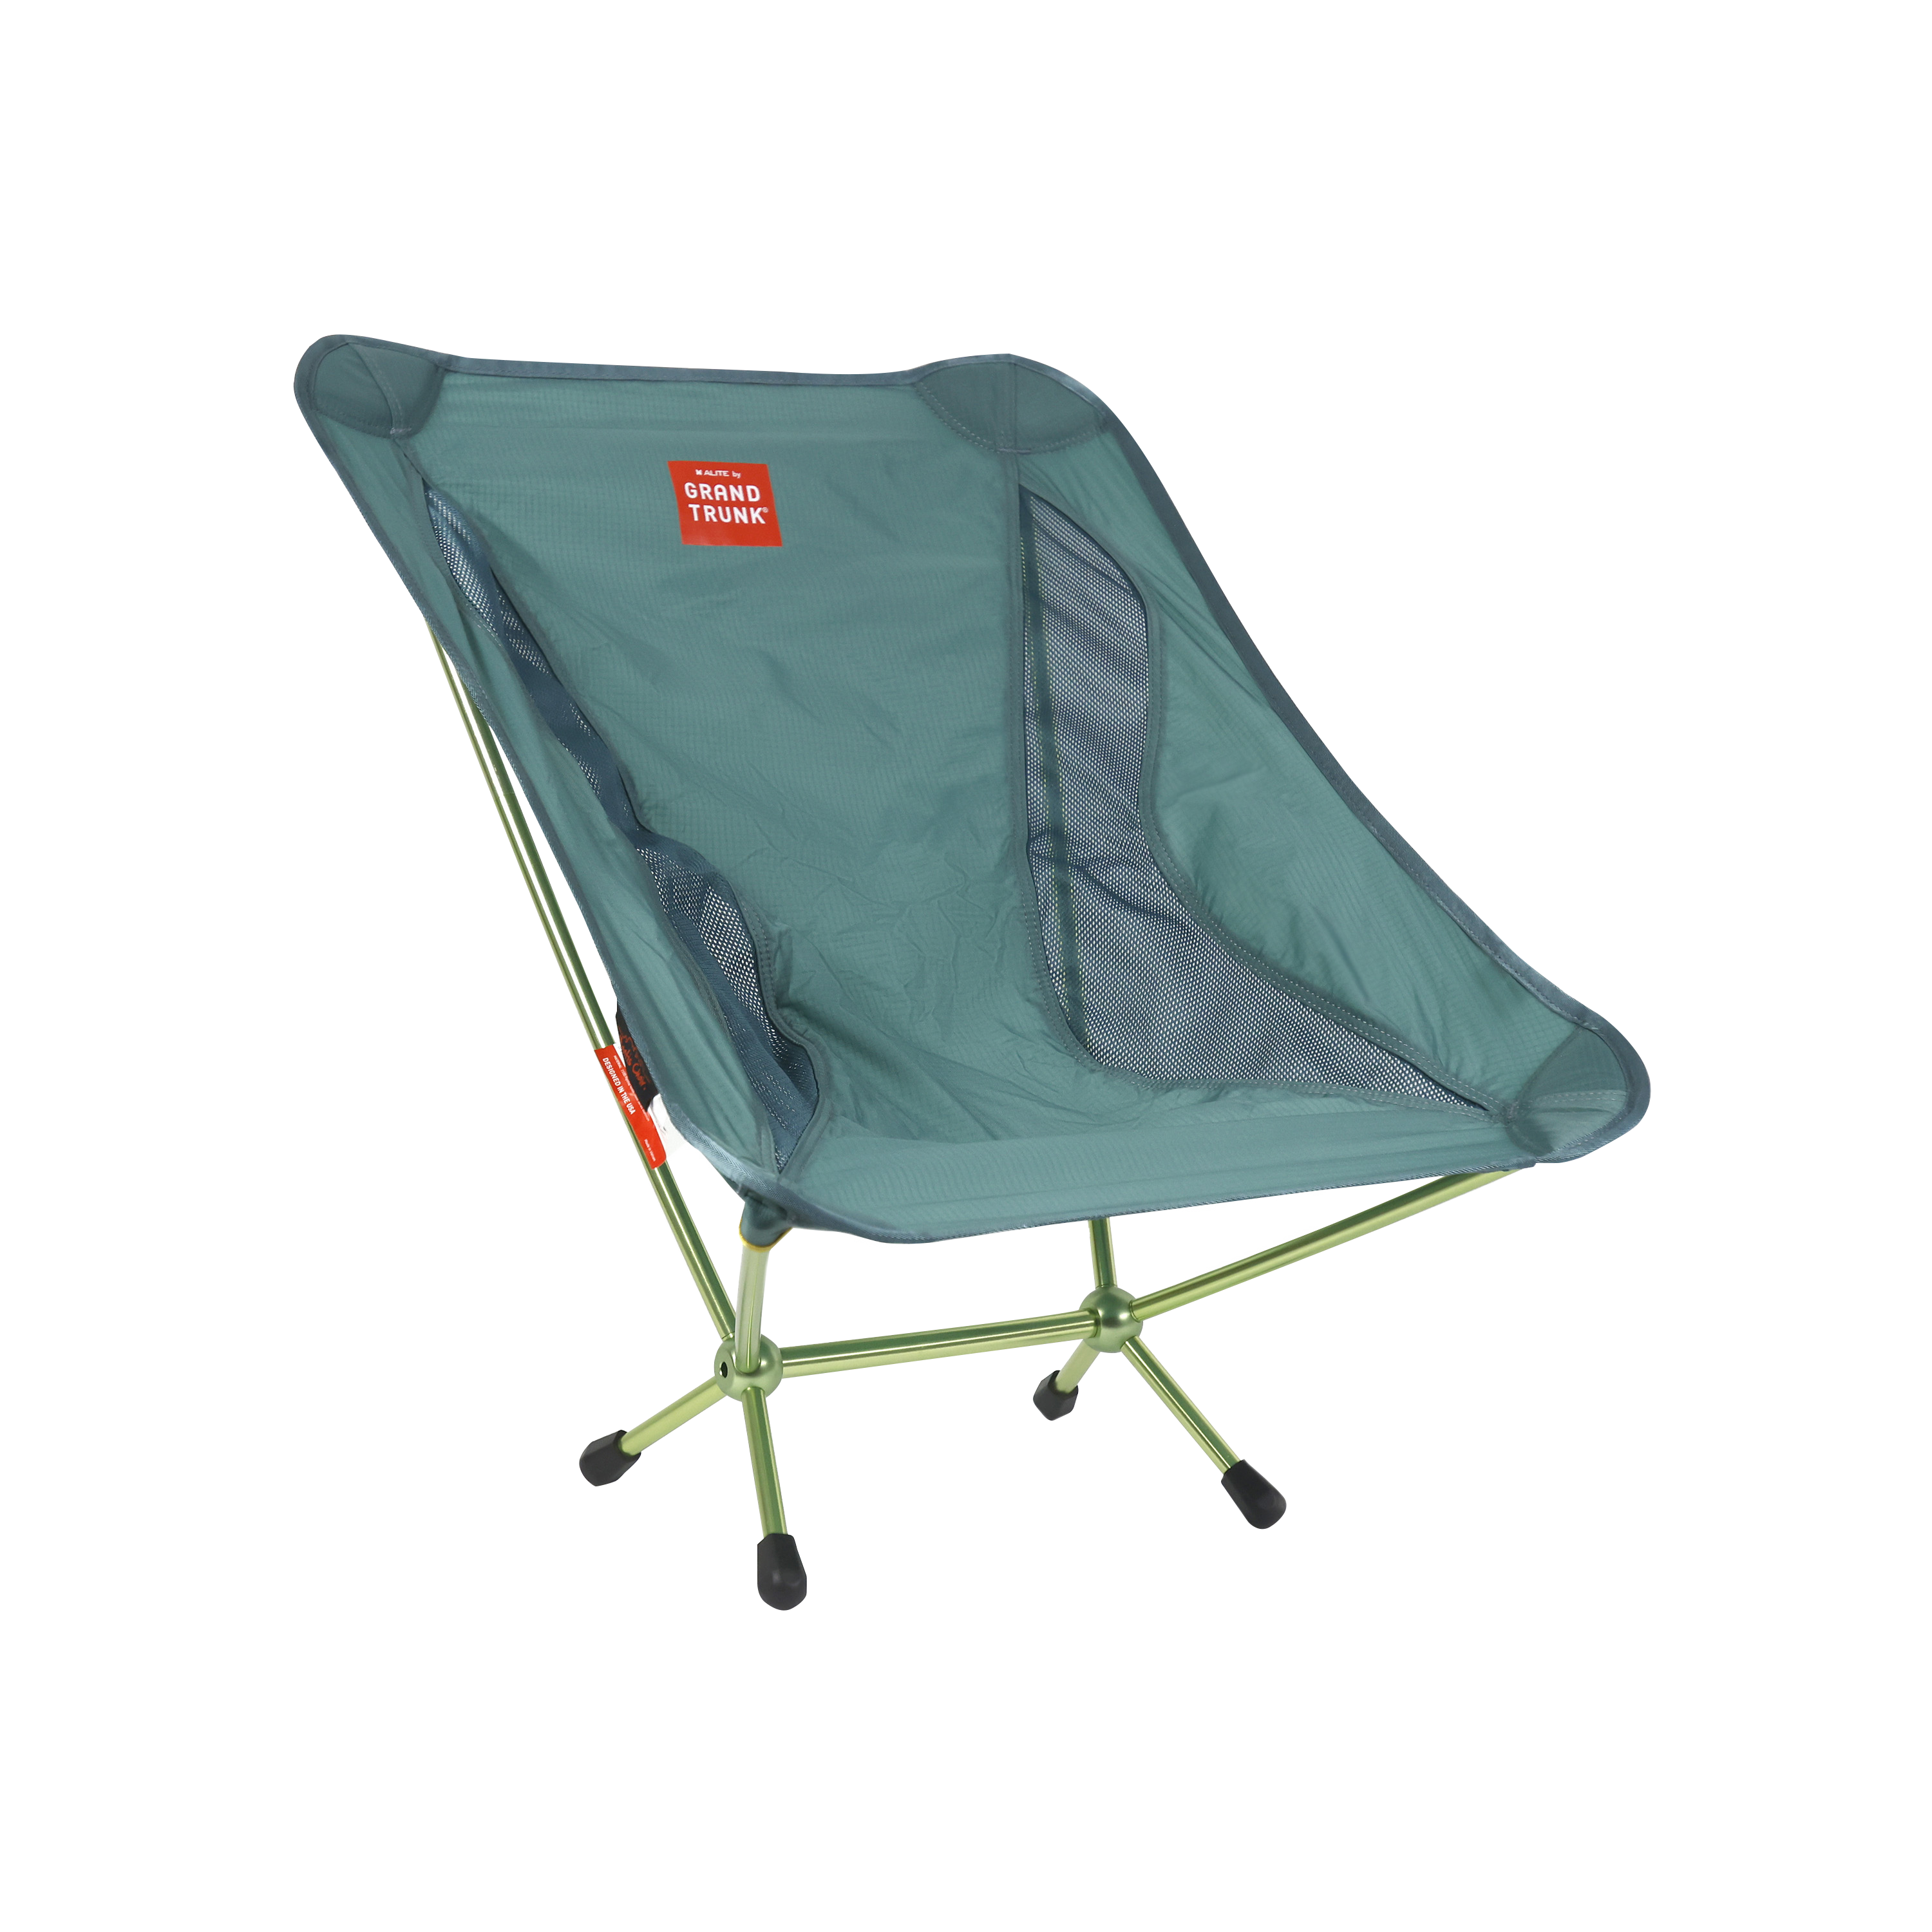 mantis chair durable packable lightweight comfortable